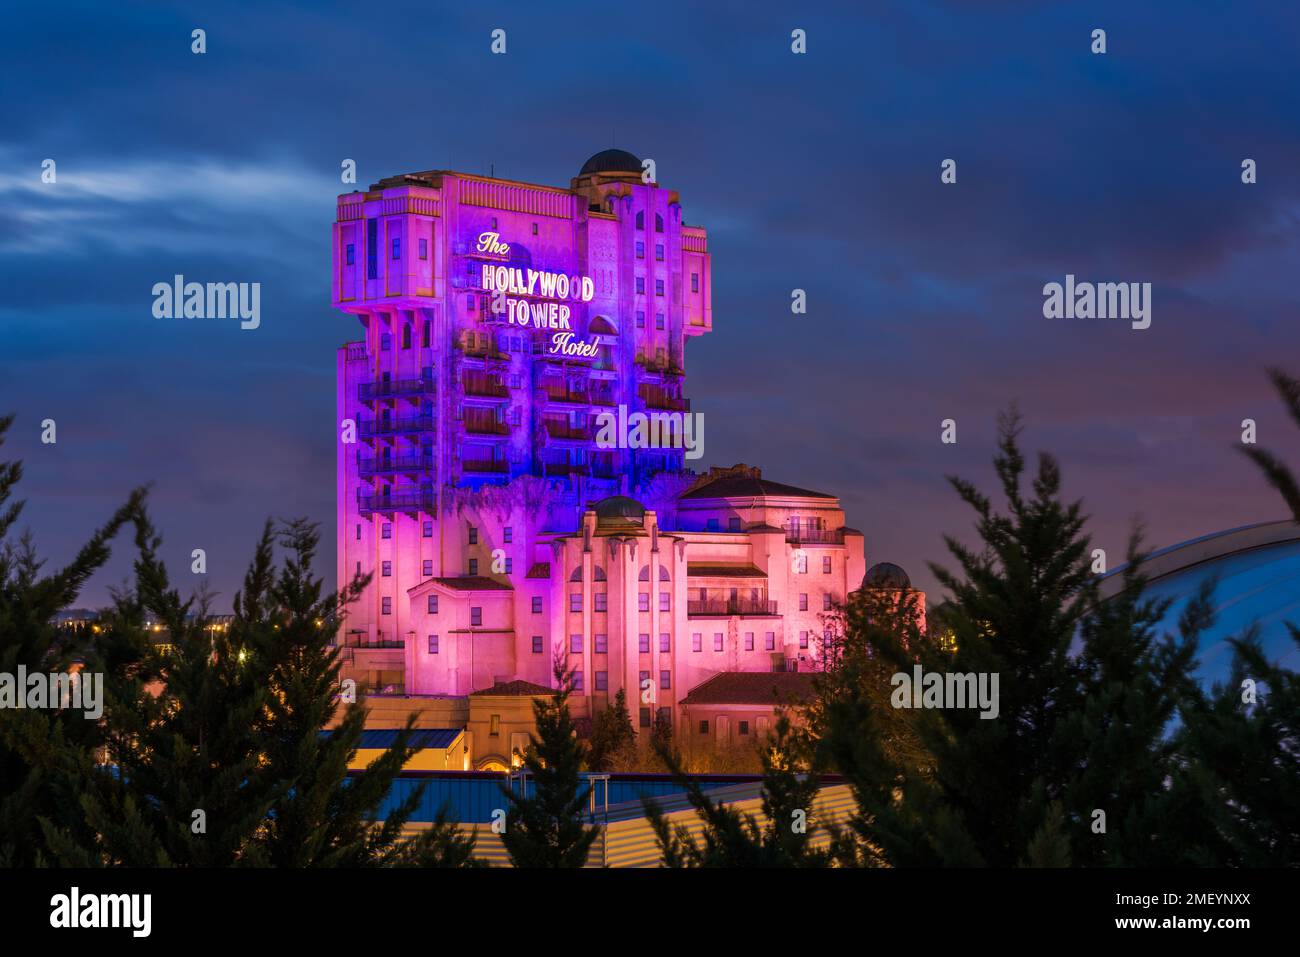 La Torre del terrore è un'attrazione al Walt Disney Studios Park a Disneyland Parigi, Francia. Foto Stock